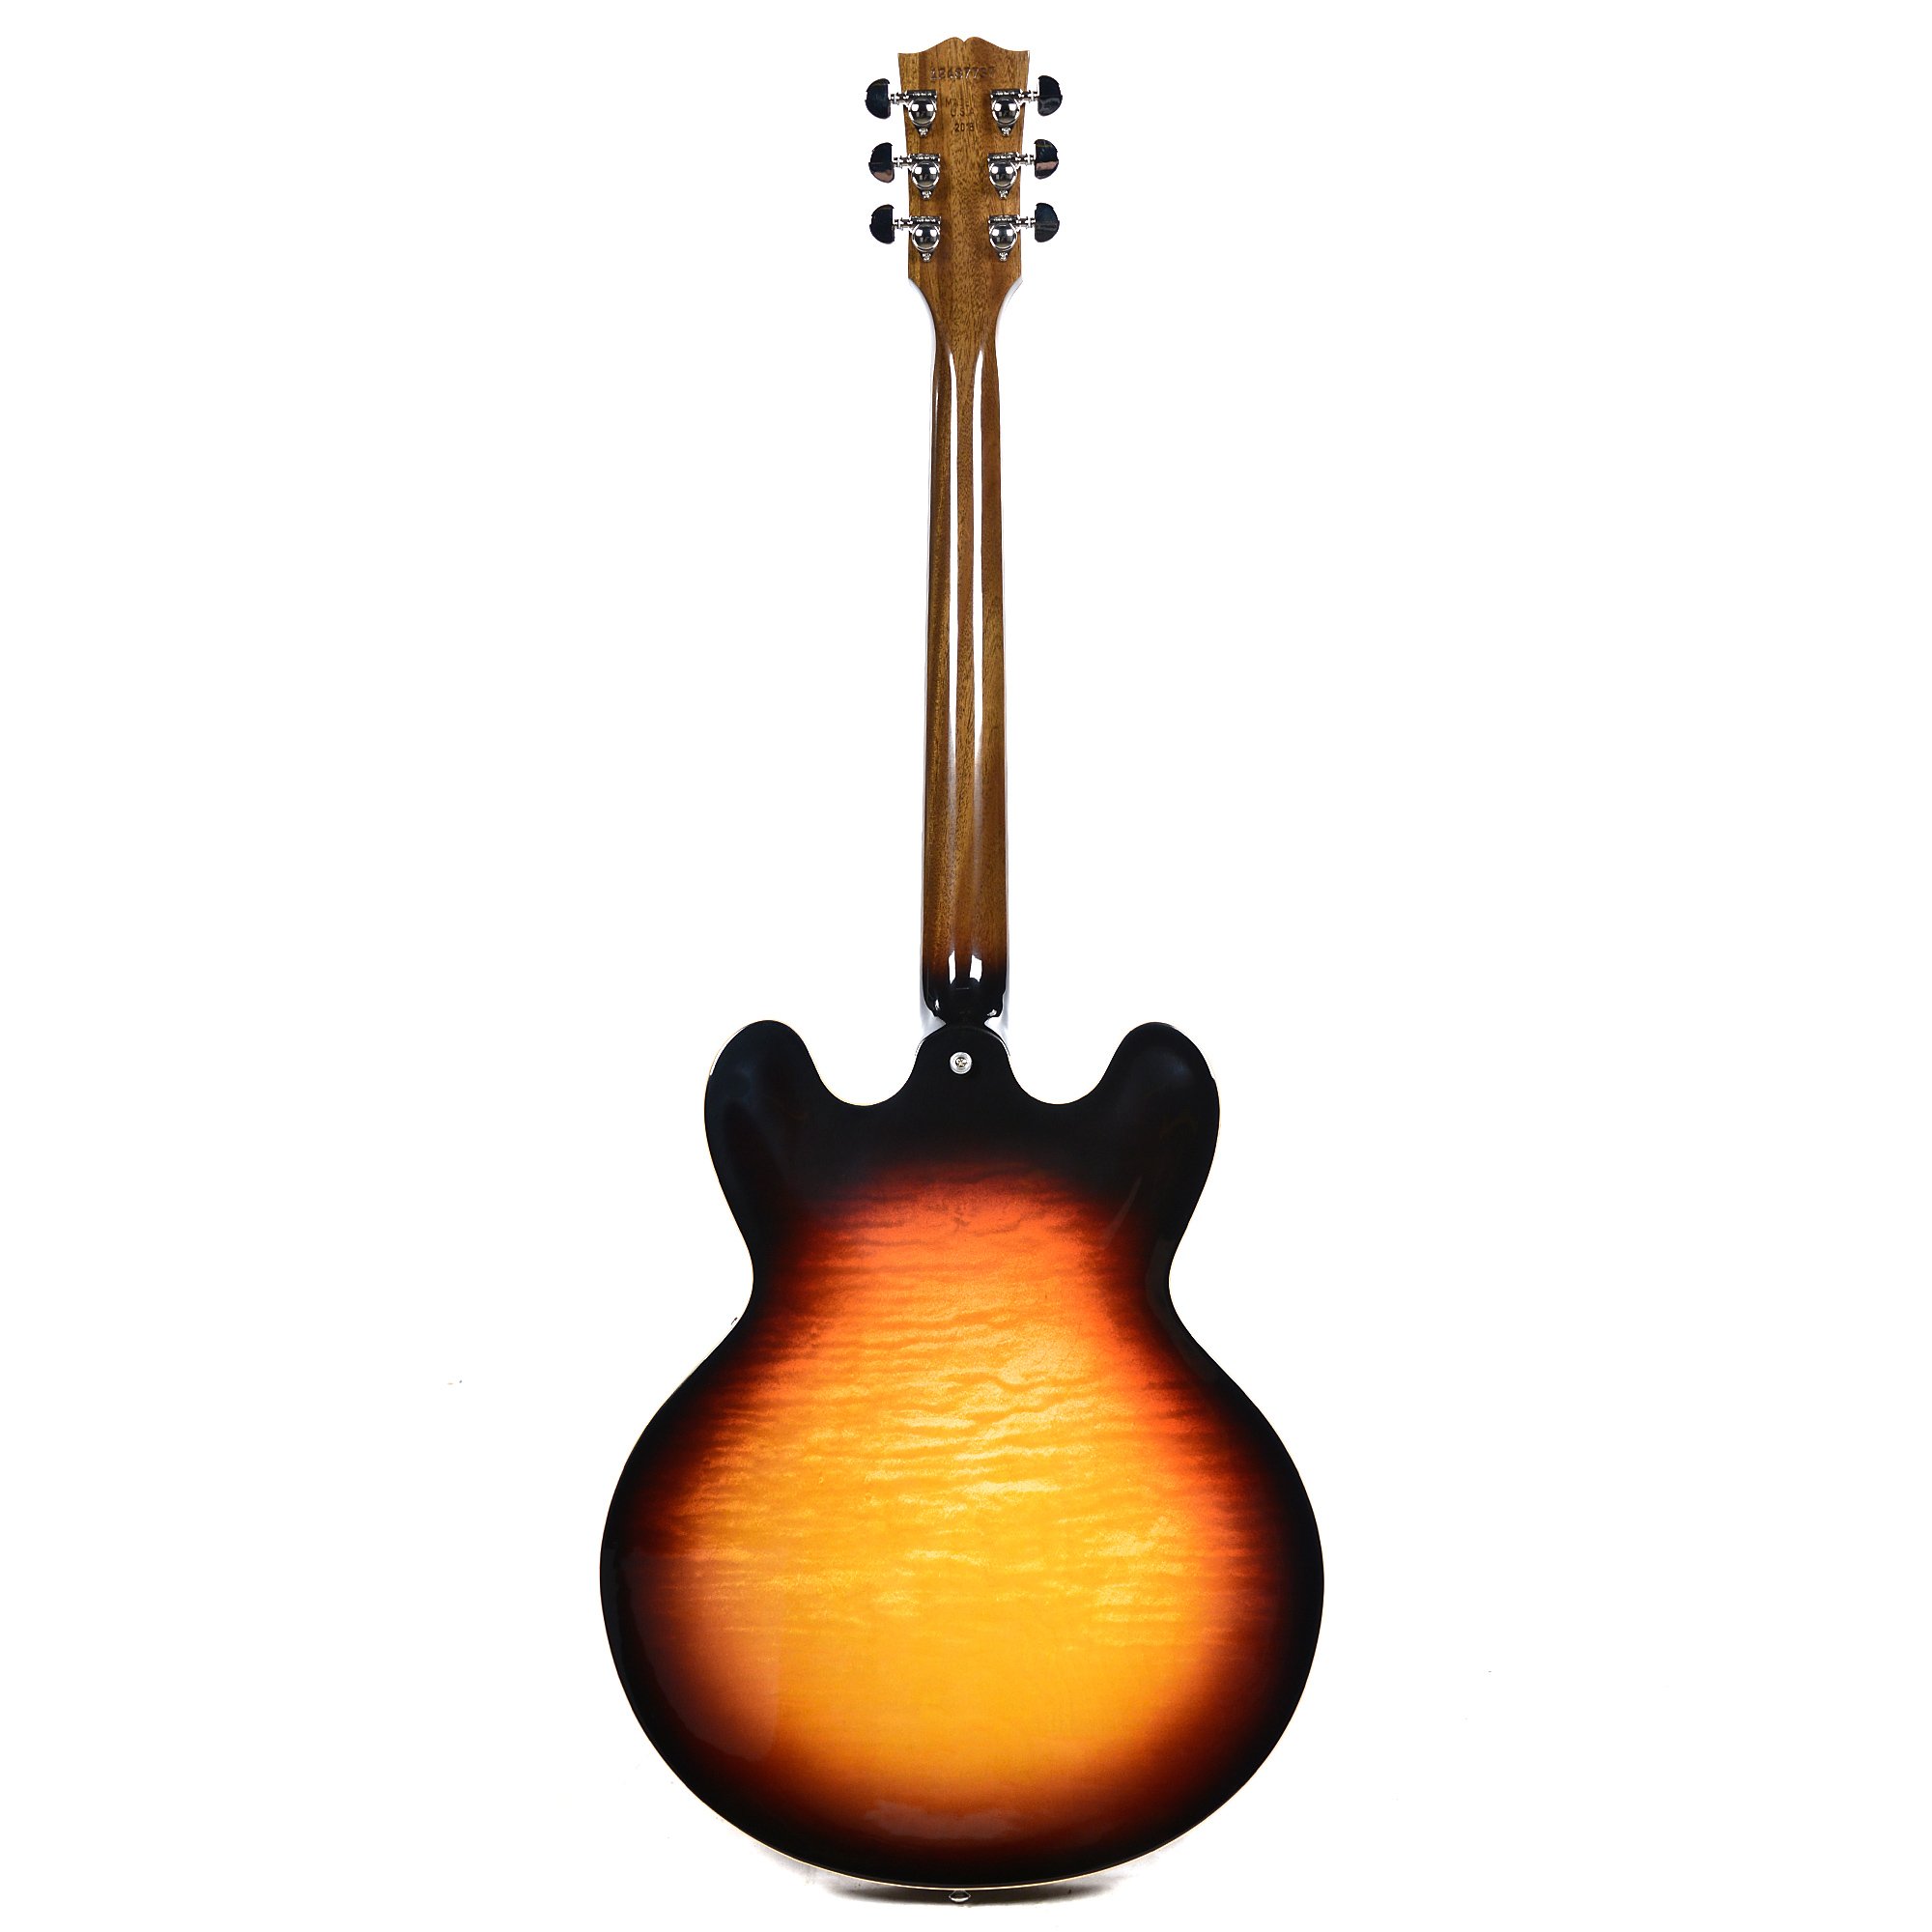 Gibson Es-335 Figured 2018 Ltd - Antique Sunset Burst - Semi-hollow electric guitar - Variation 1